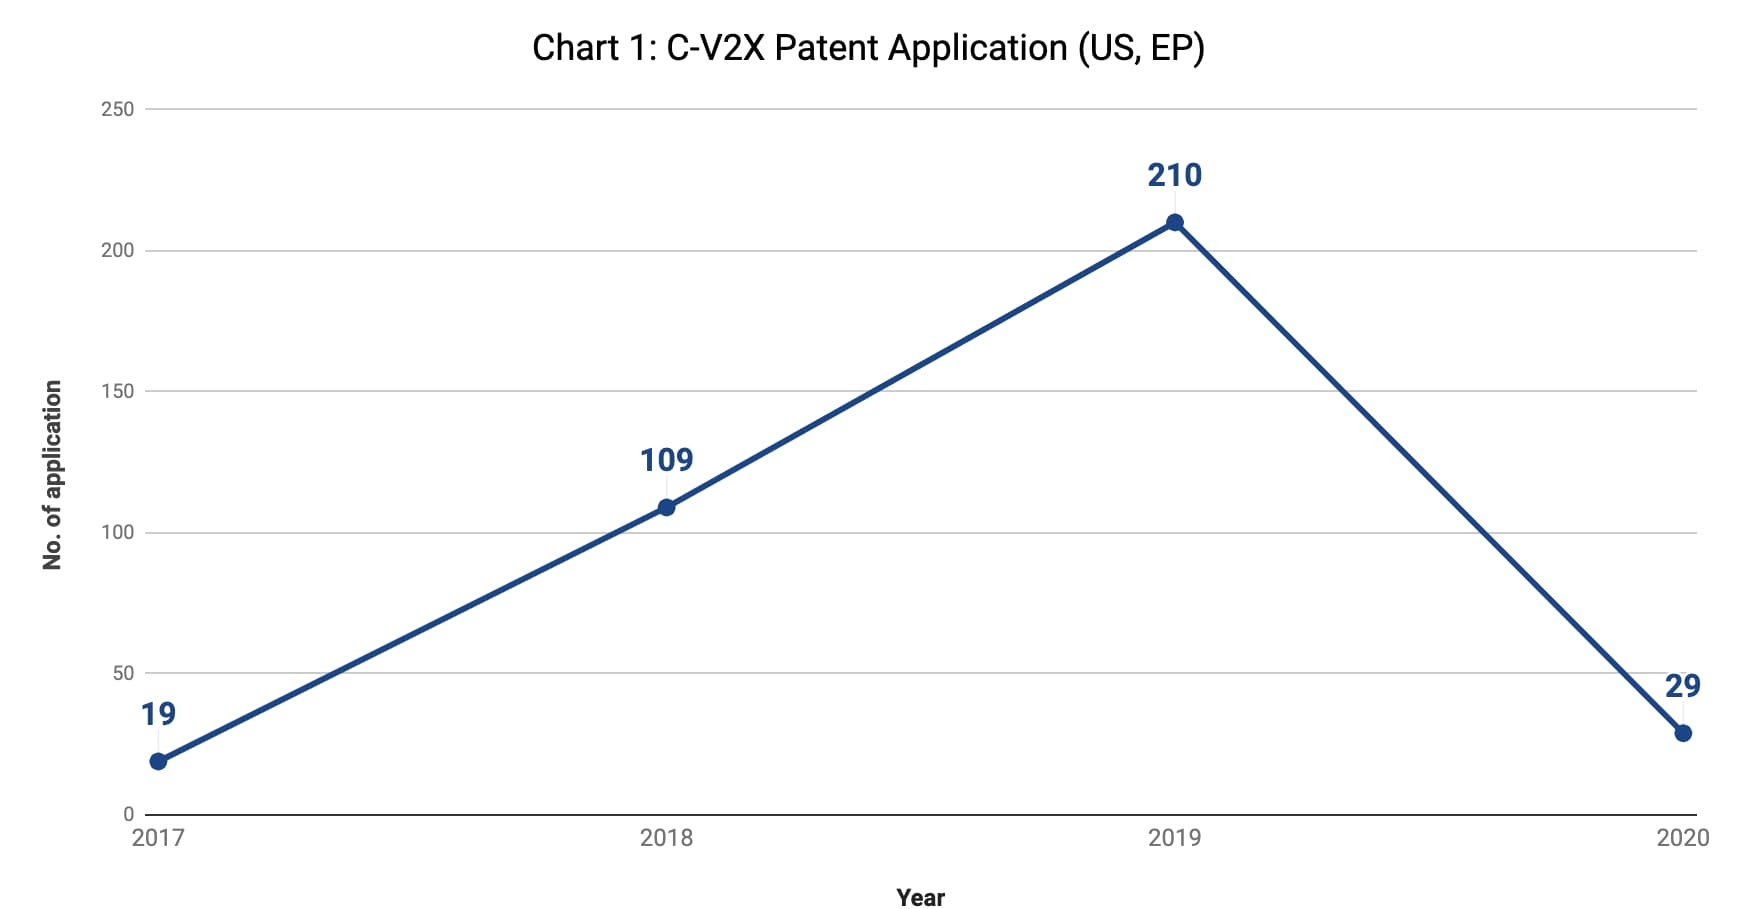 C-V2X patent application (US&EP)